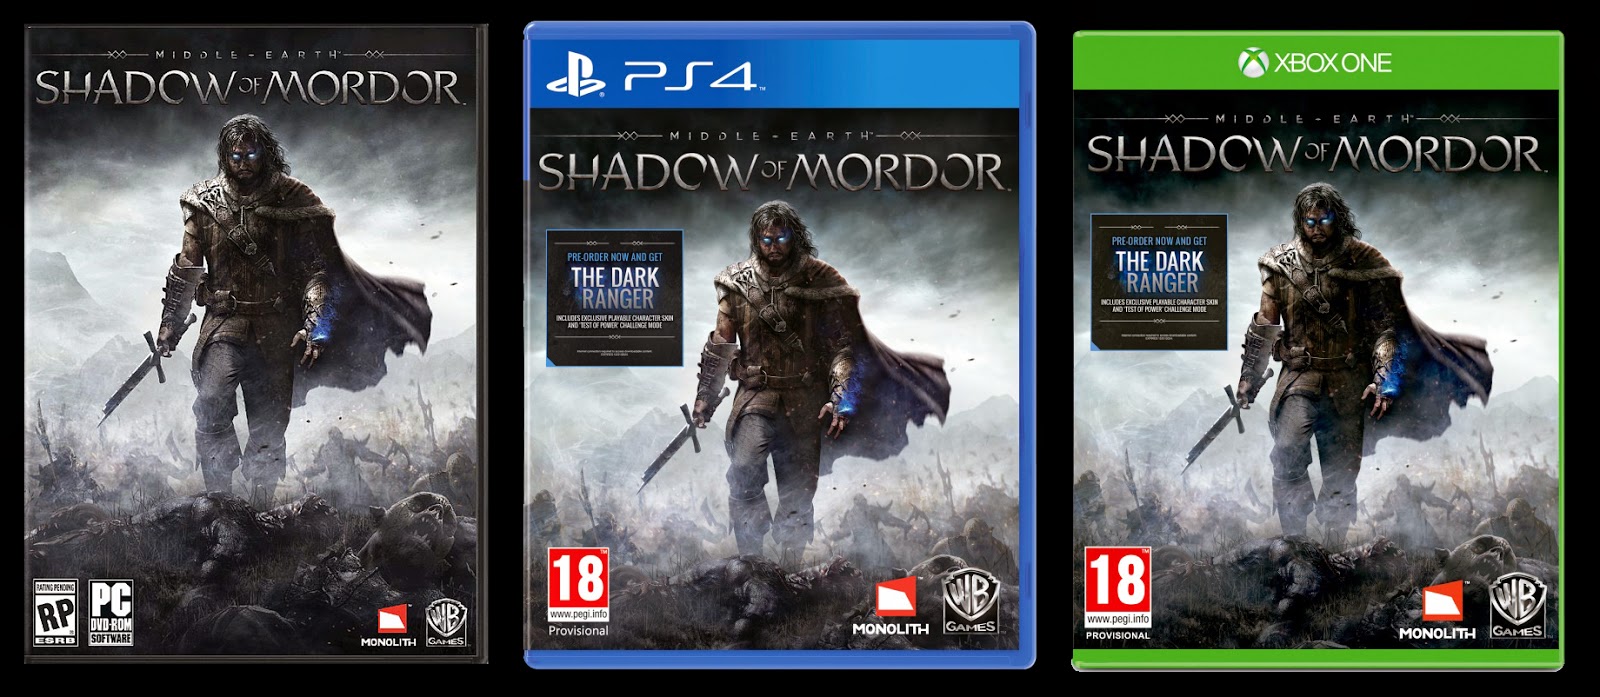 Xbox 360 Super Slim Skin - Middle Earth: Shadow of Mordor - Pop Arte Skins